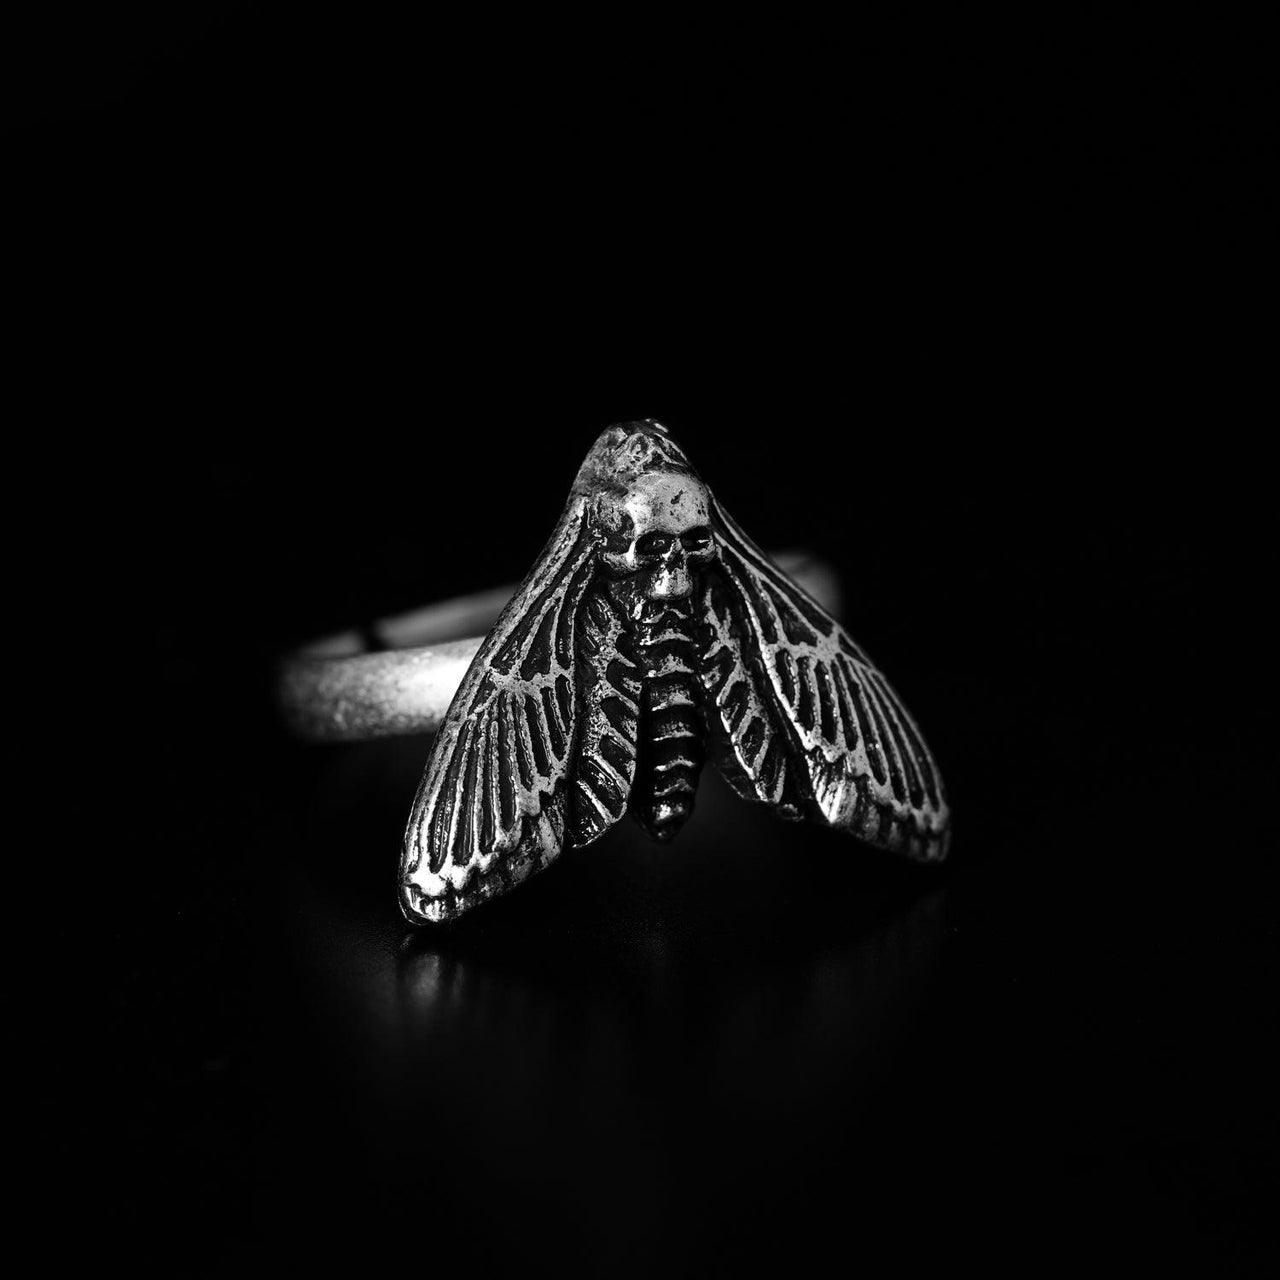 Death Skull Moth Ring - Black Feather Design